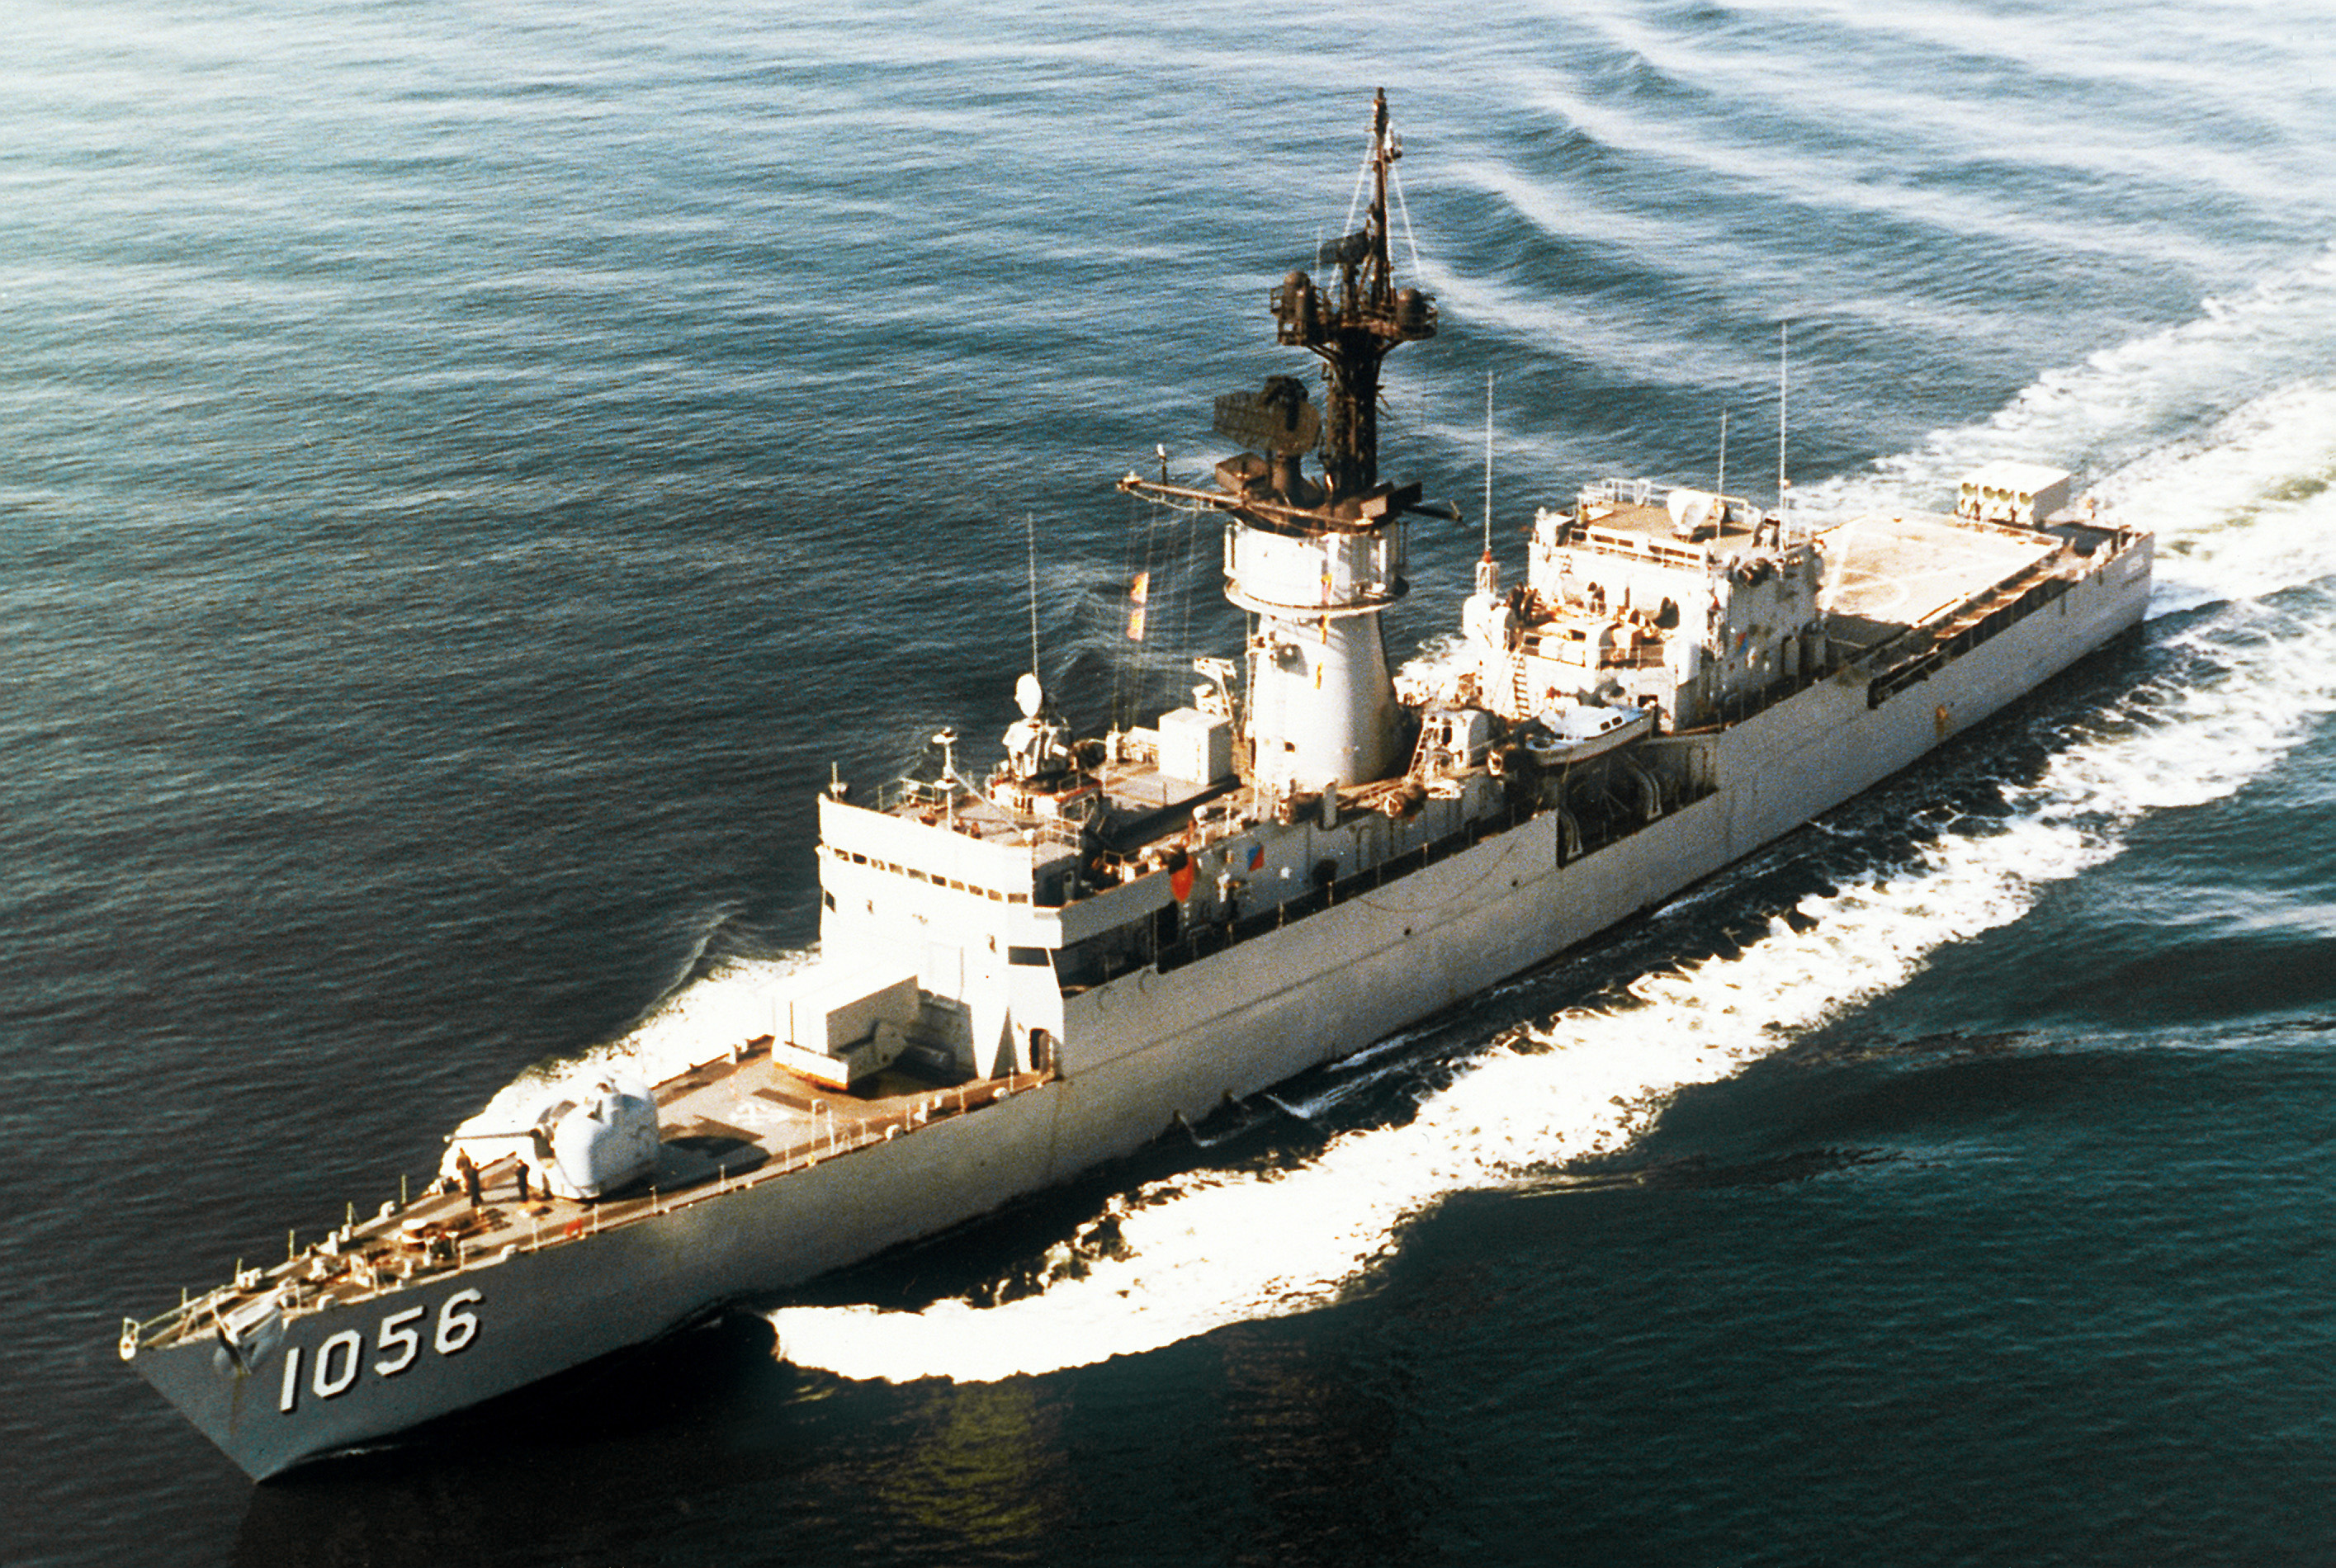 File:USS Connole (FF-1056) underway in the Atlantic Ocean on 22 September  1984 (6392228).jpg - Wikipedia